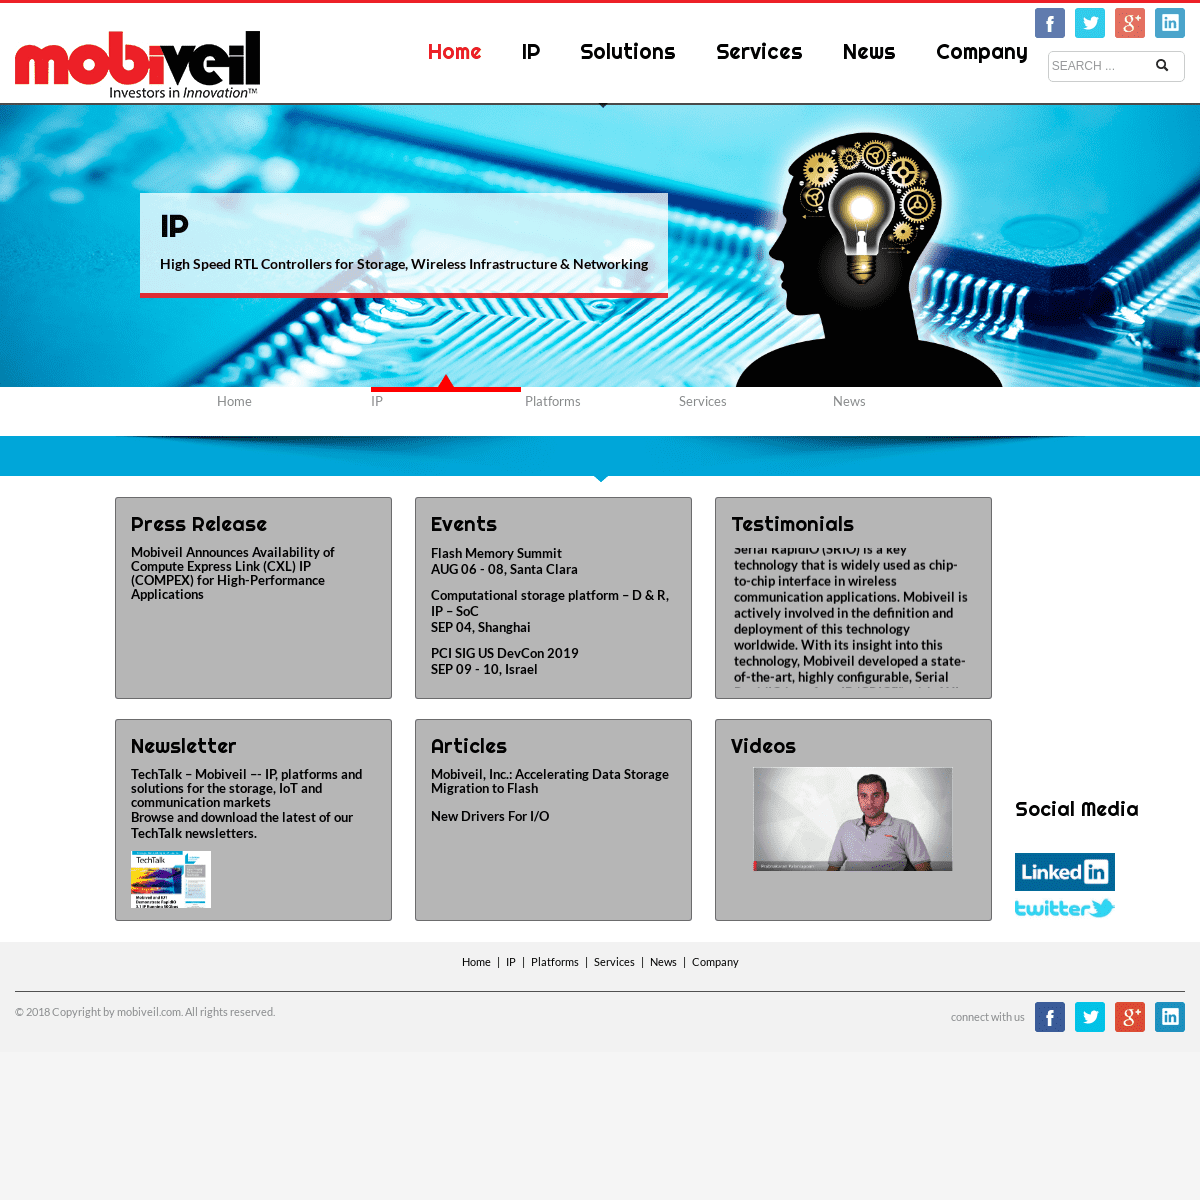 A complete backup of mobiveil.com